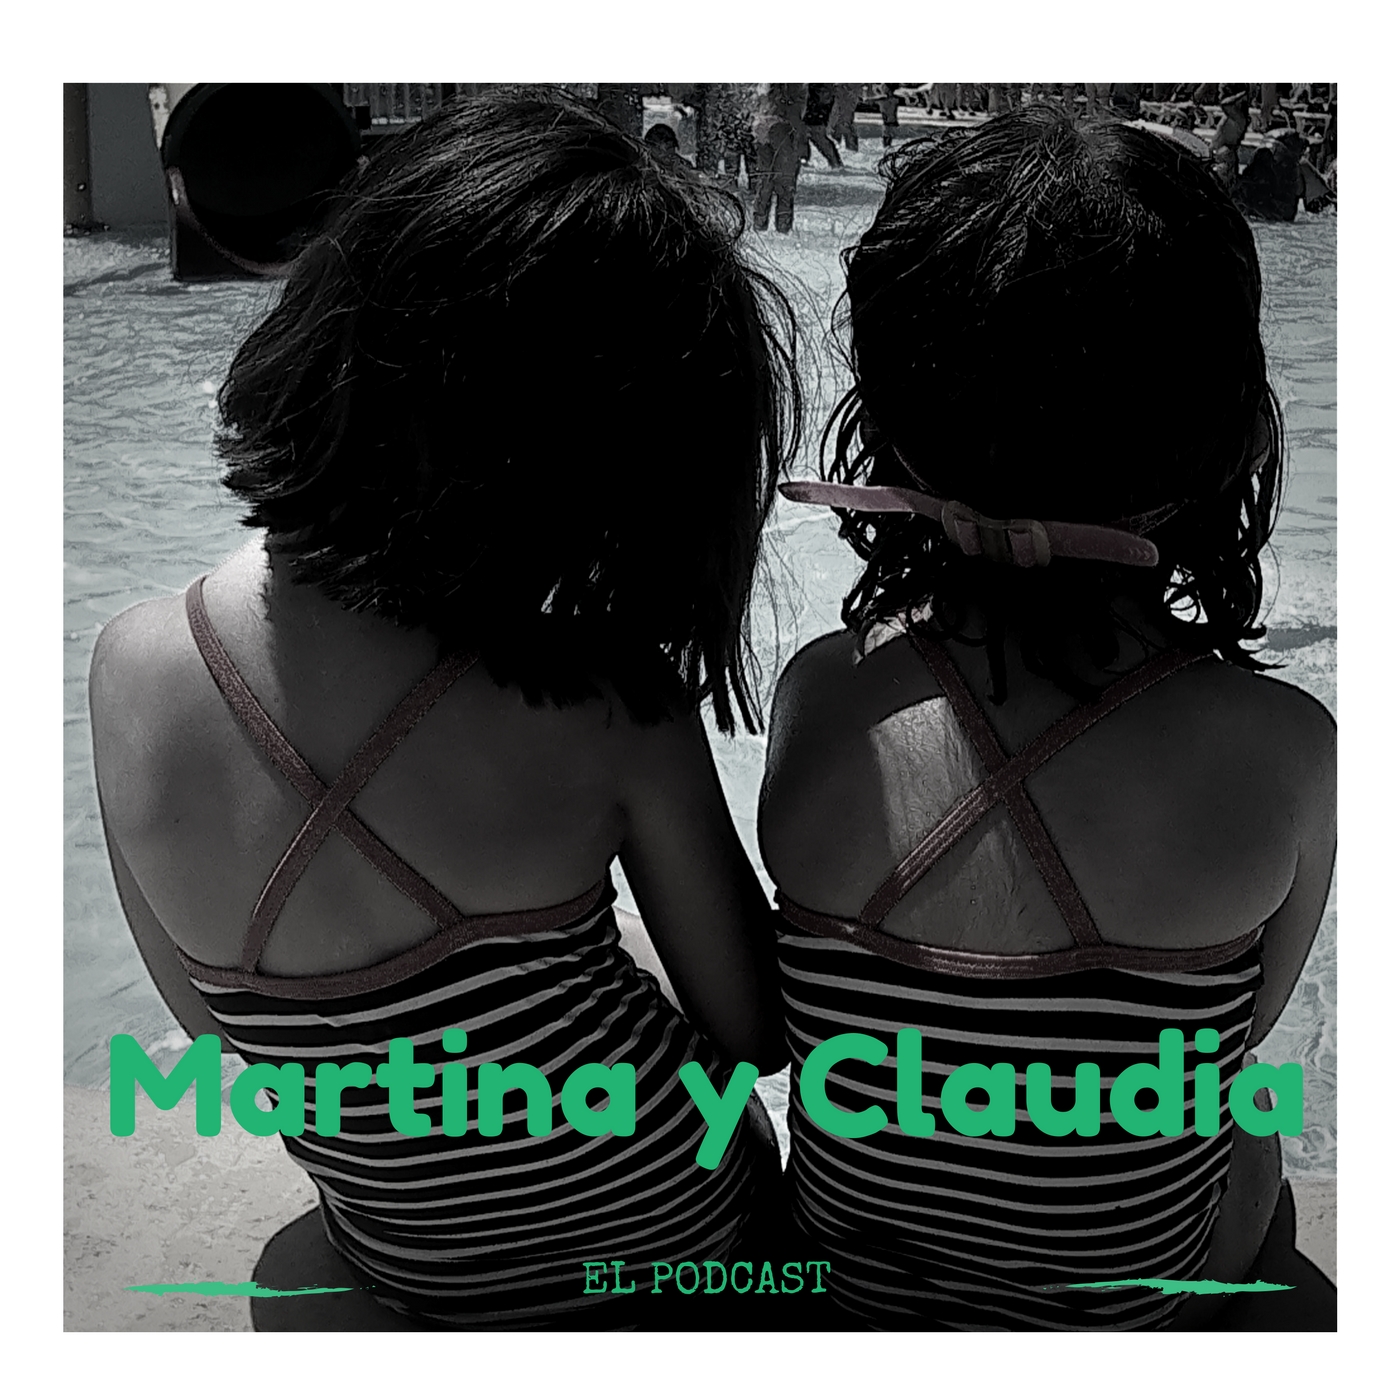 Martina y Claudia podcast